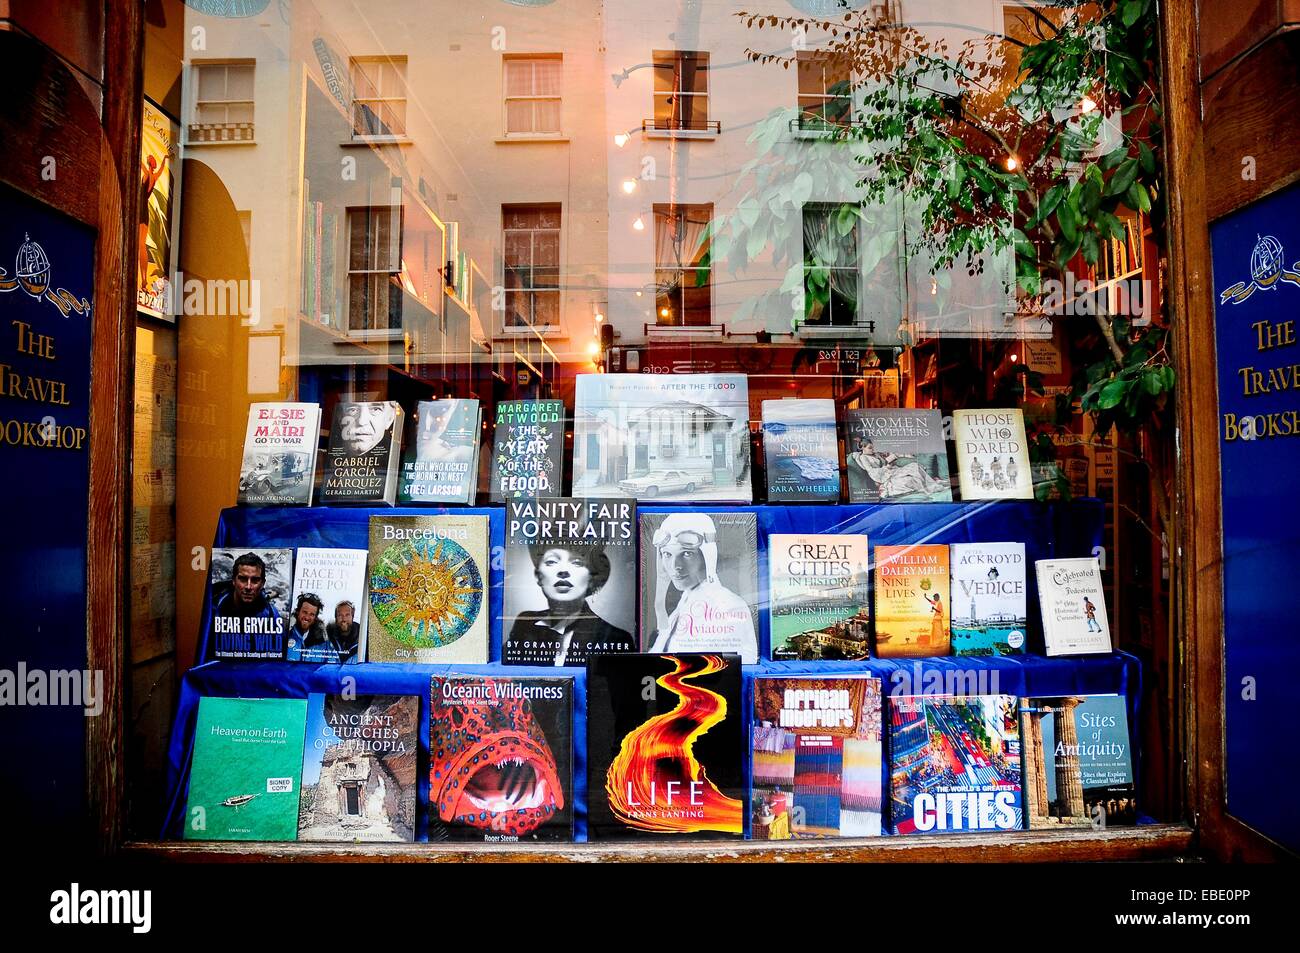 https://c8.alamy.com/comp/EBE0PP/the-travel-bookshop-portobello-notting-hill-london-england-uk-europe-EBE0PP.jpg